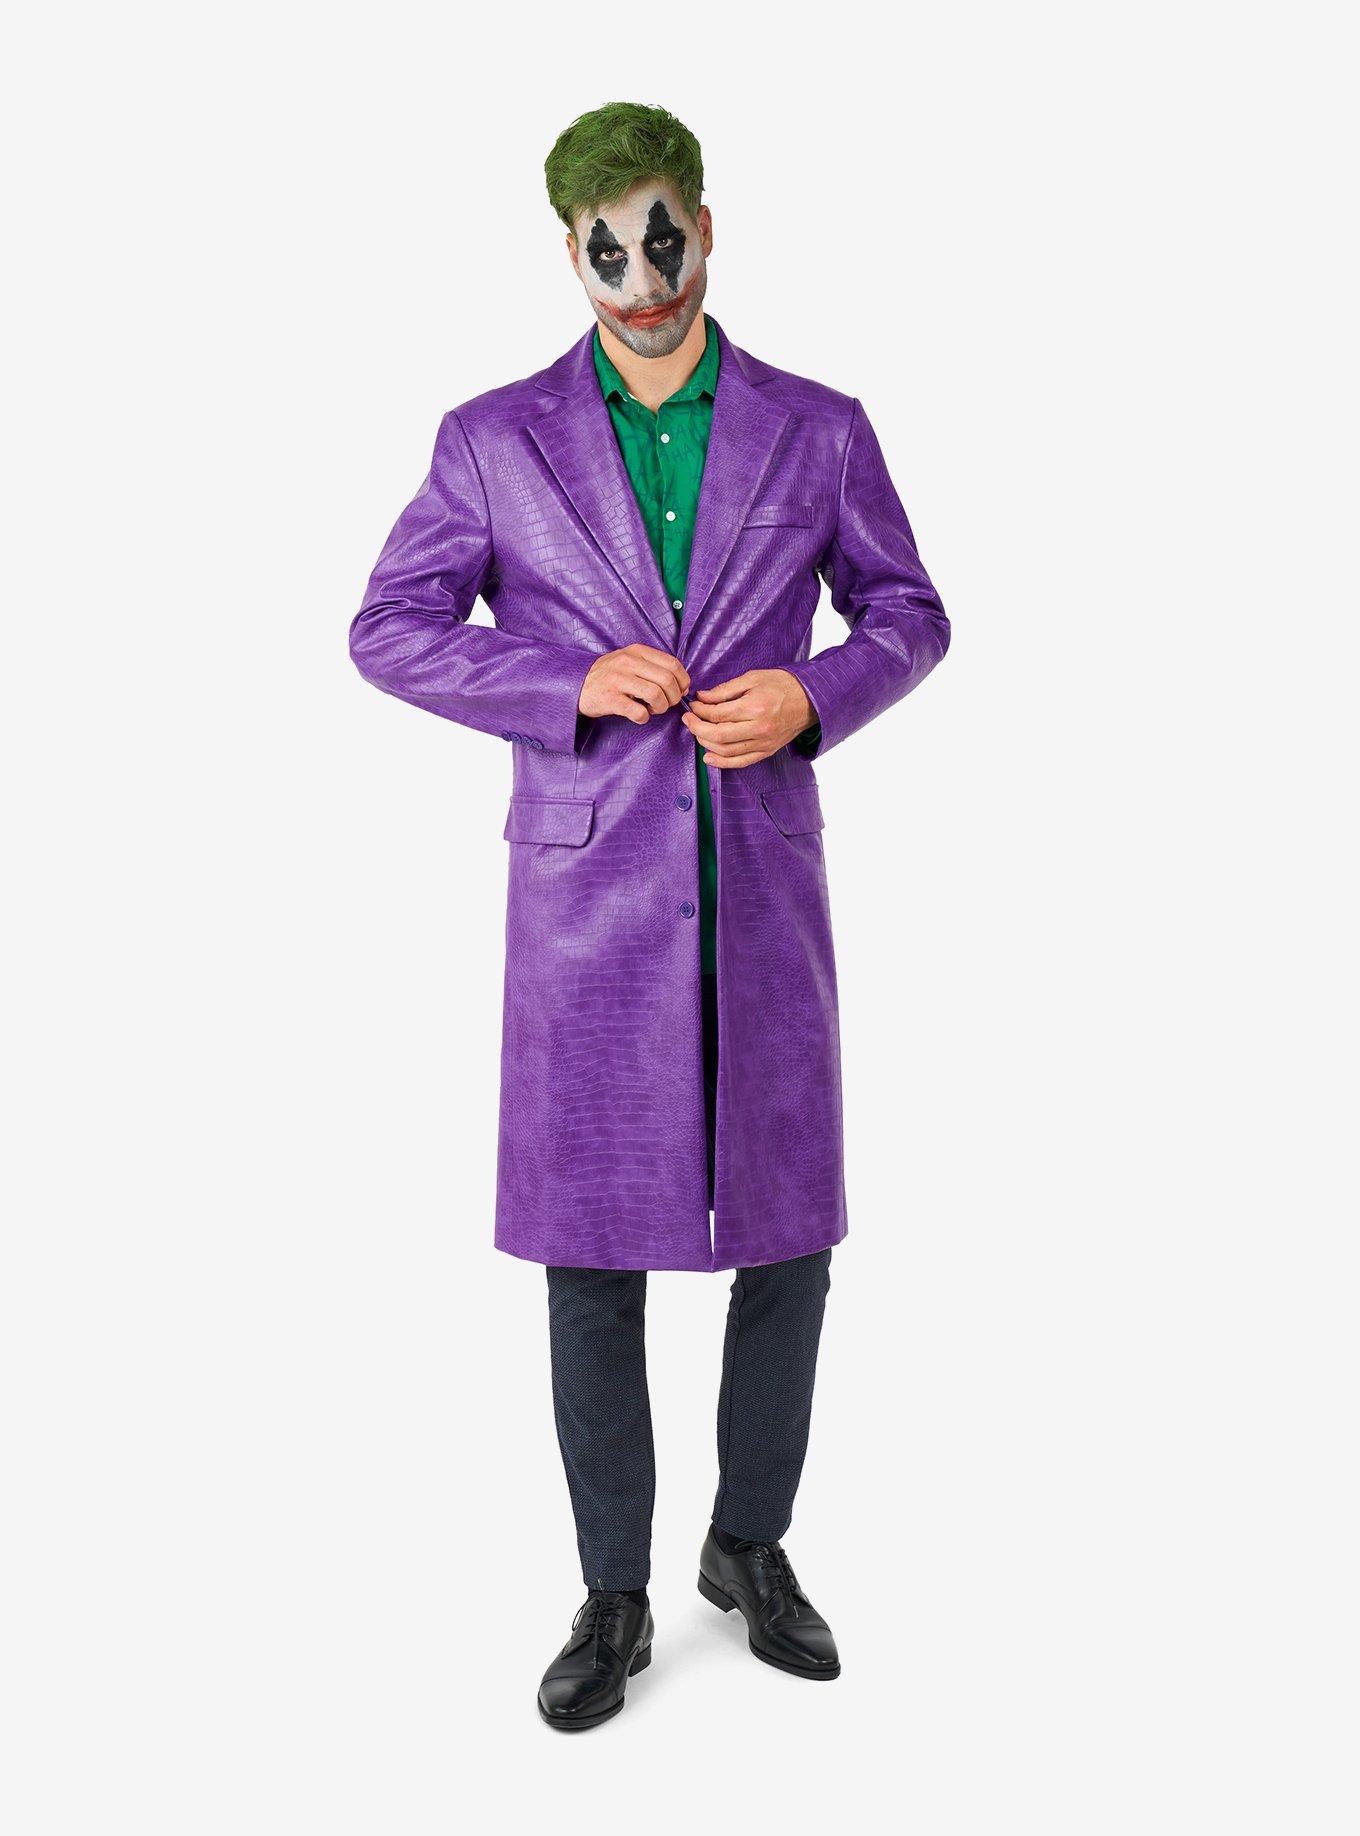 The Joker Coat